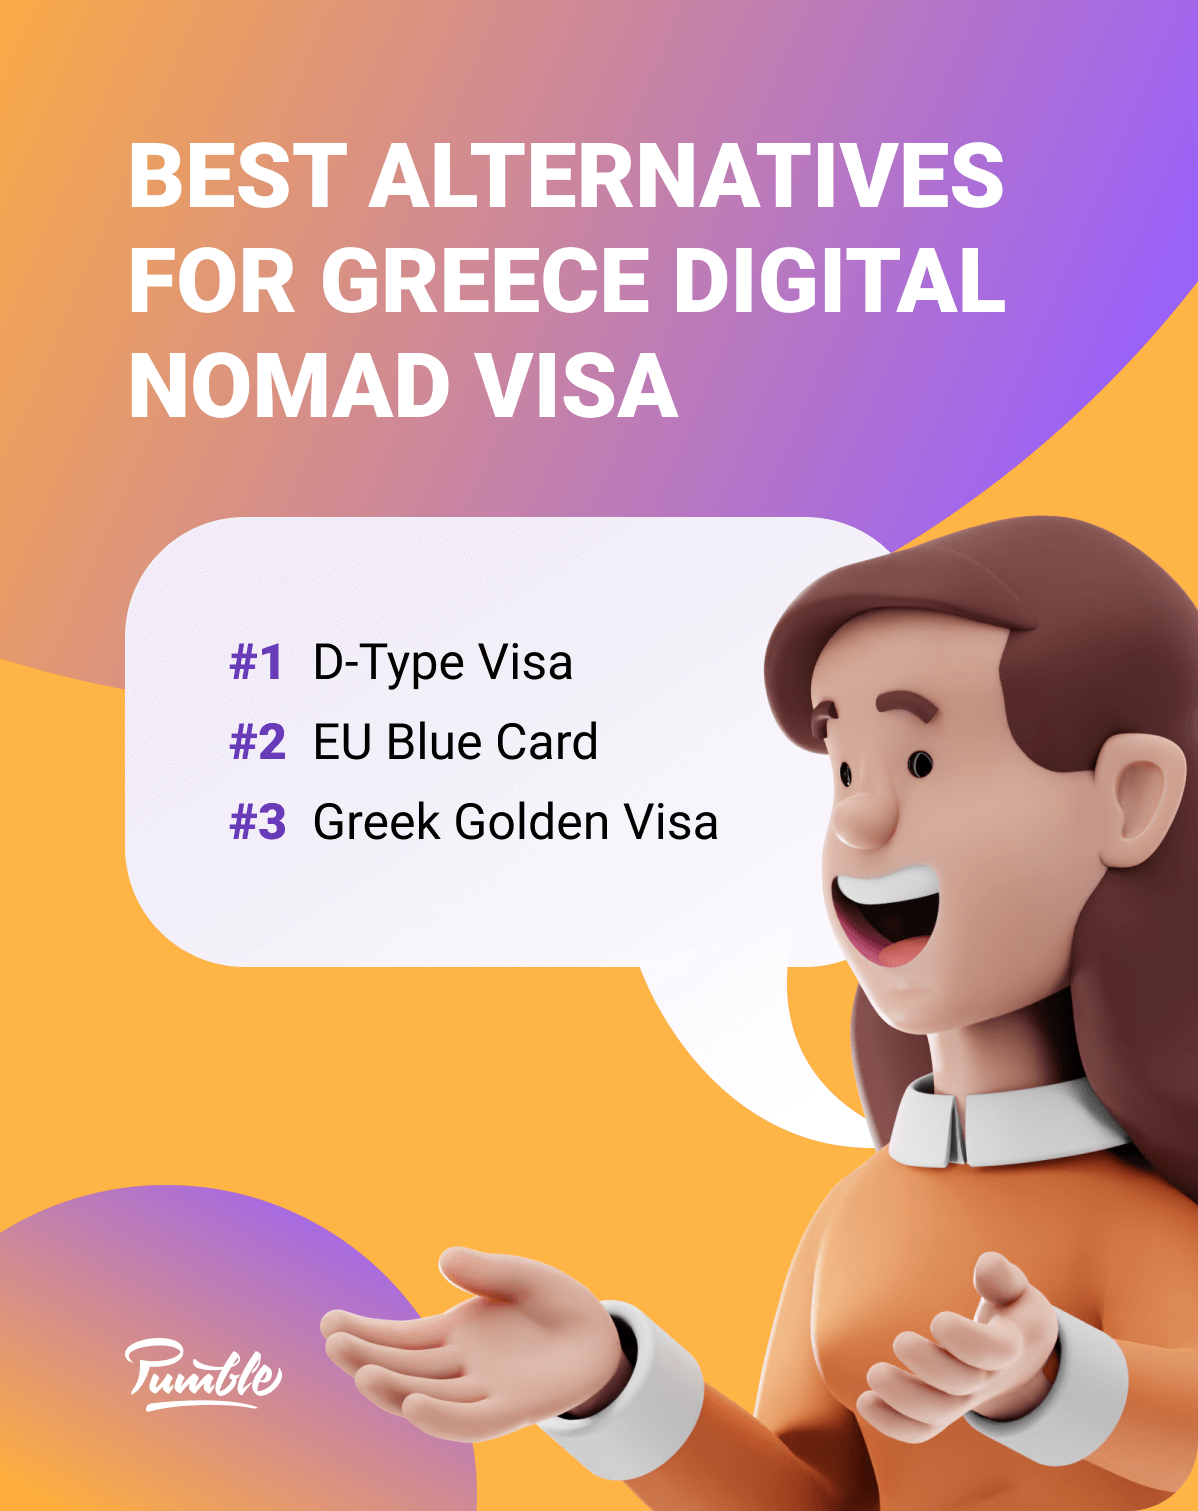 Best alternatives for Greece digital nomad visa